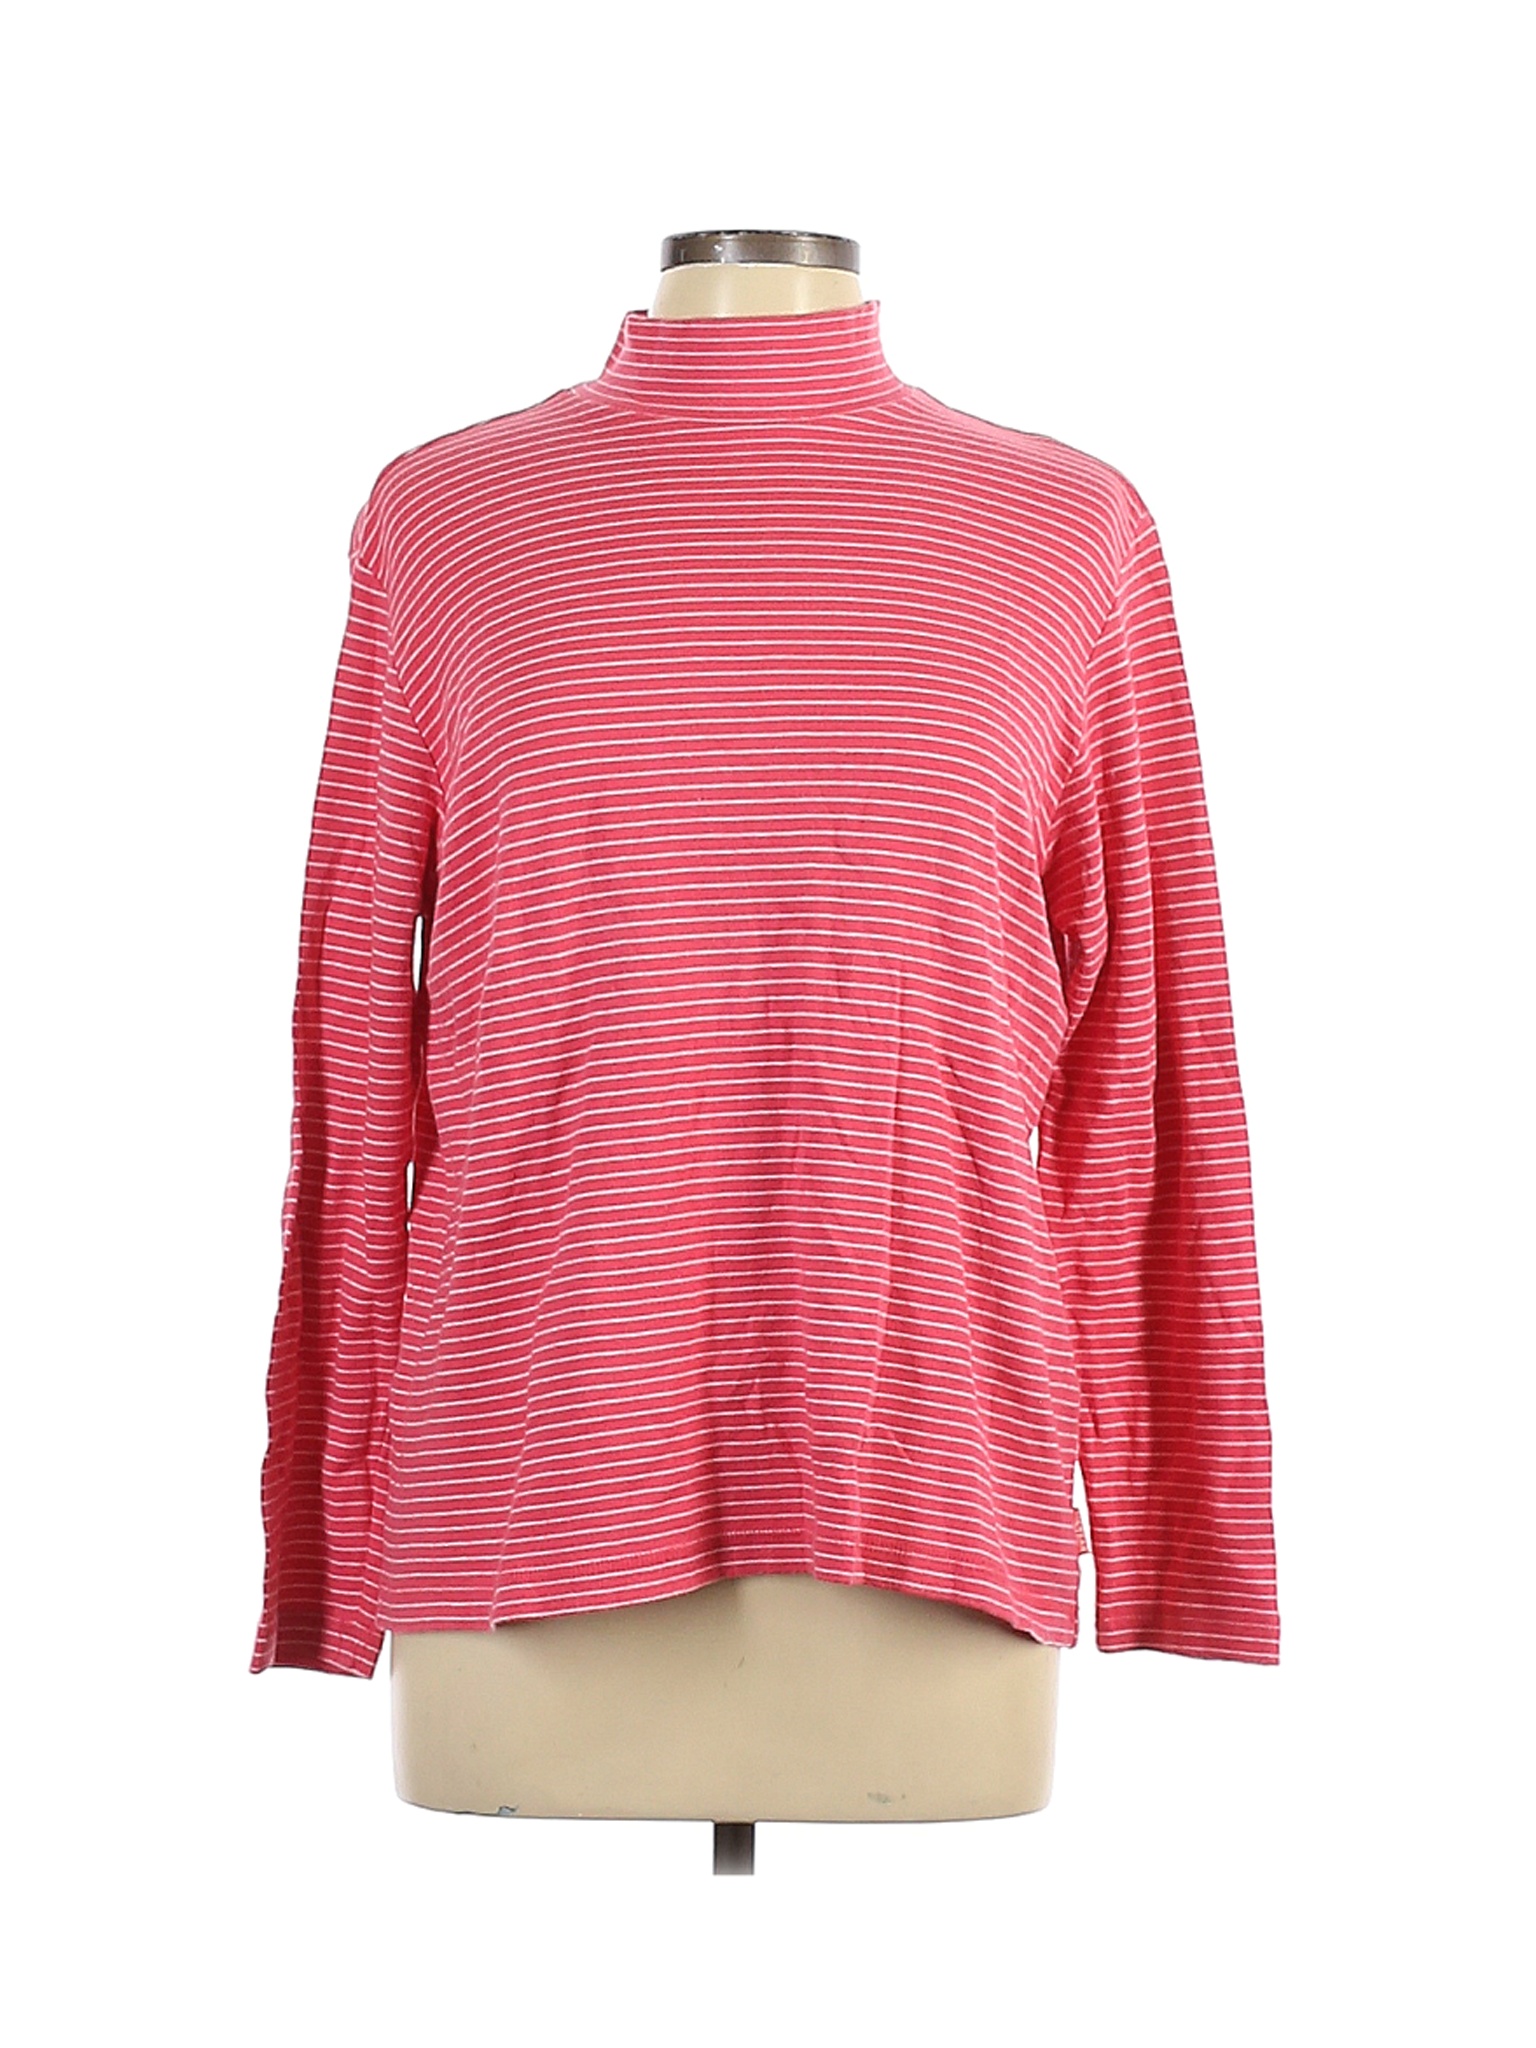 Liz Claiborne Women Pink Long Sleeve Turtleneck L | eBay